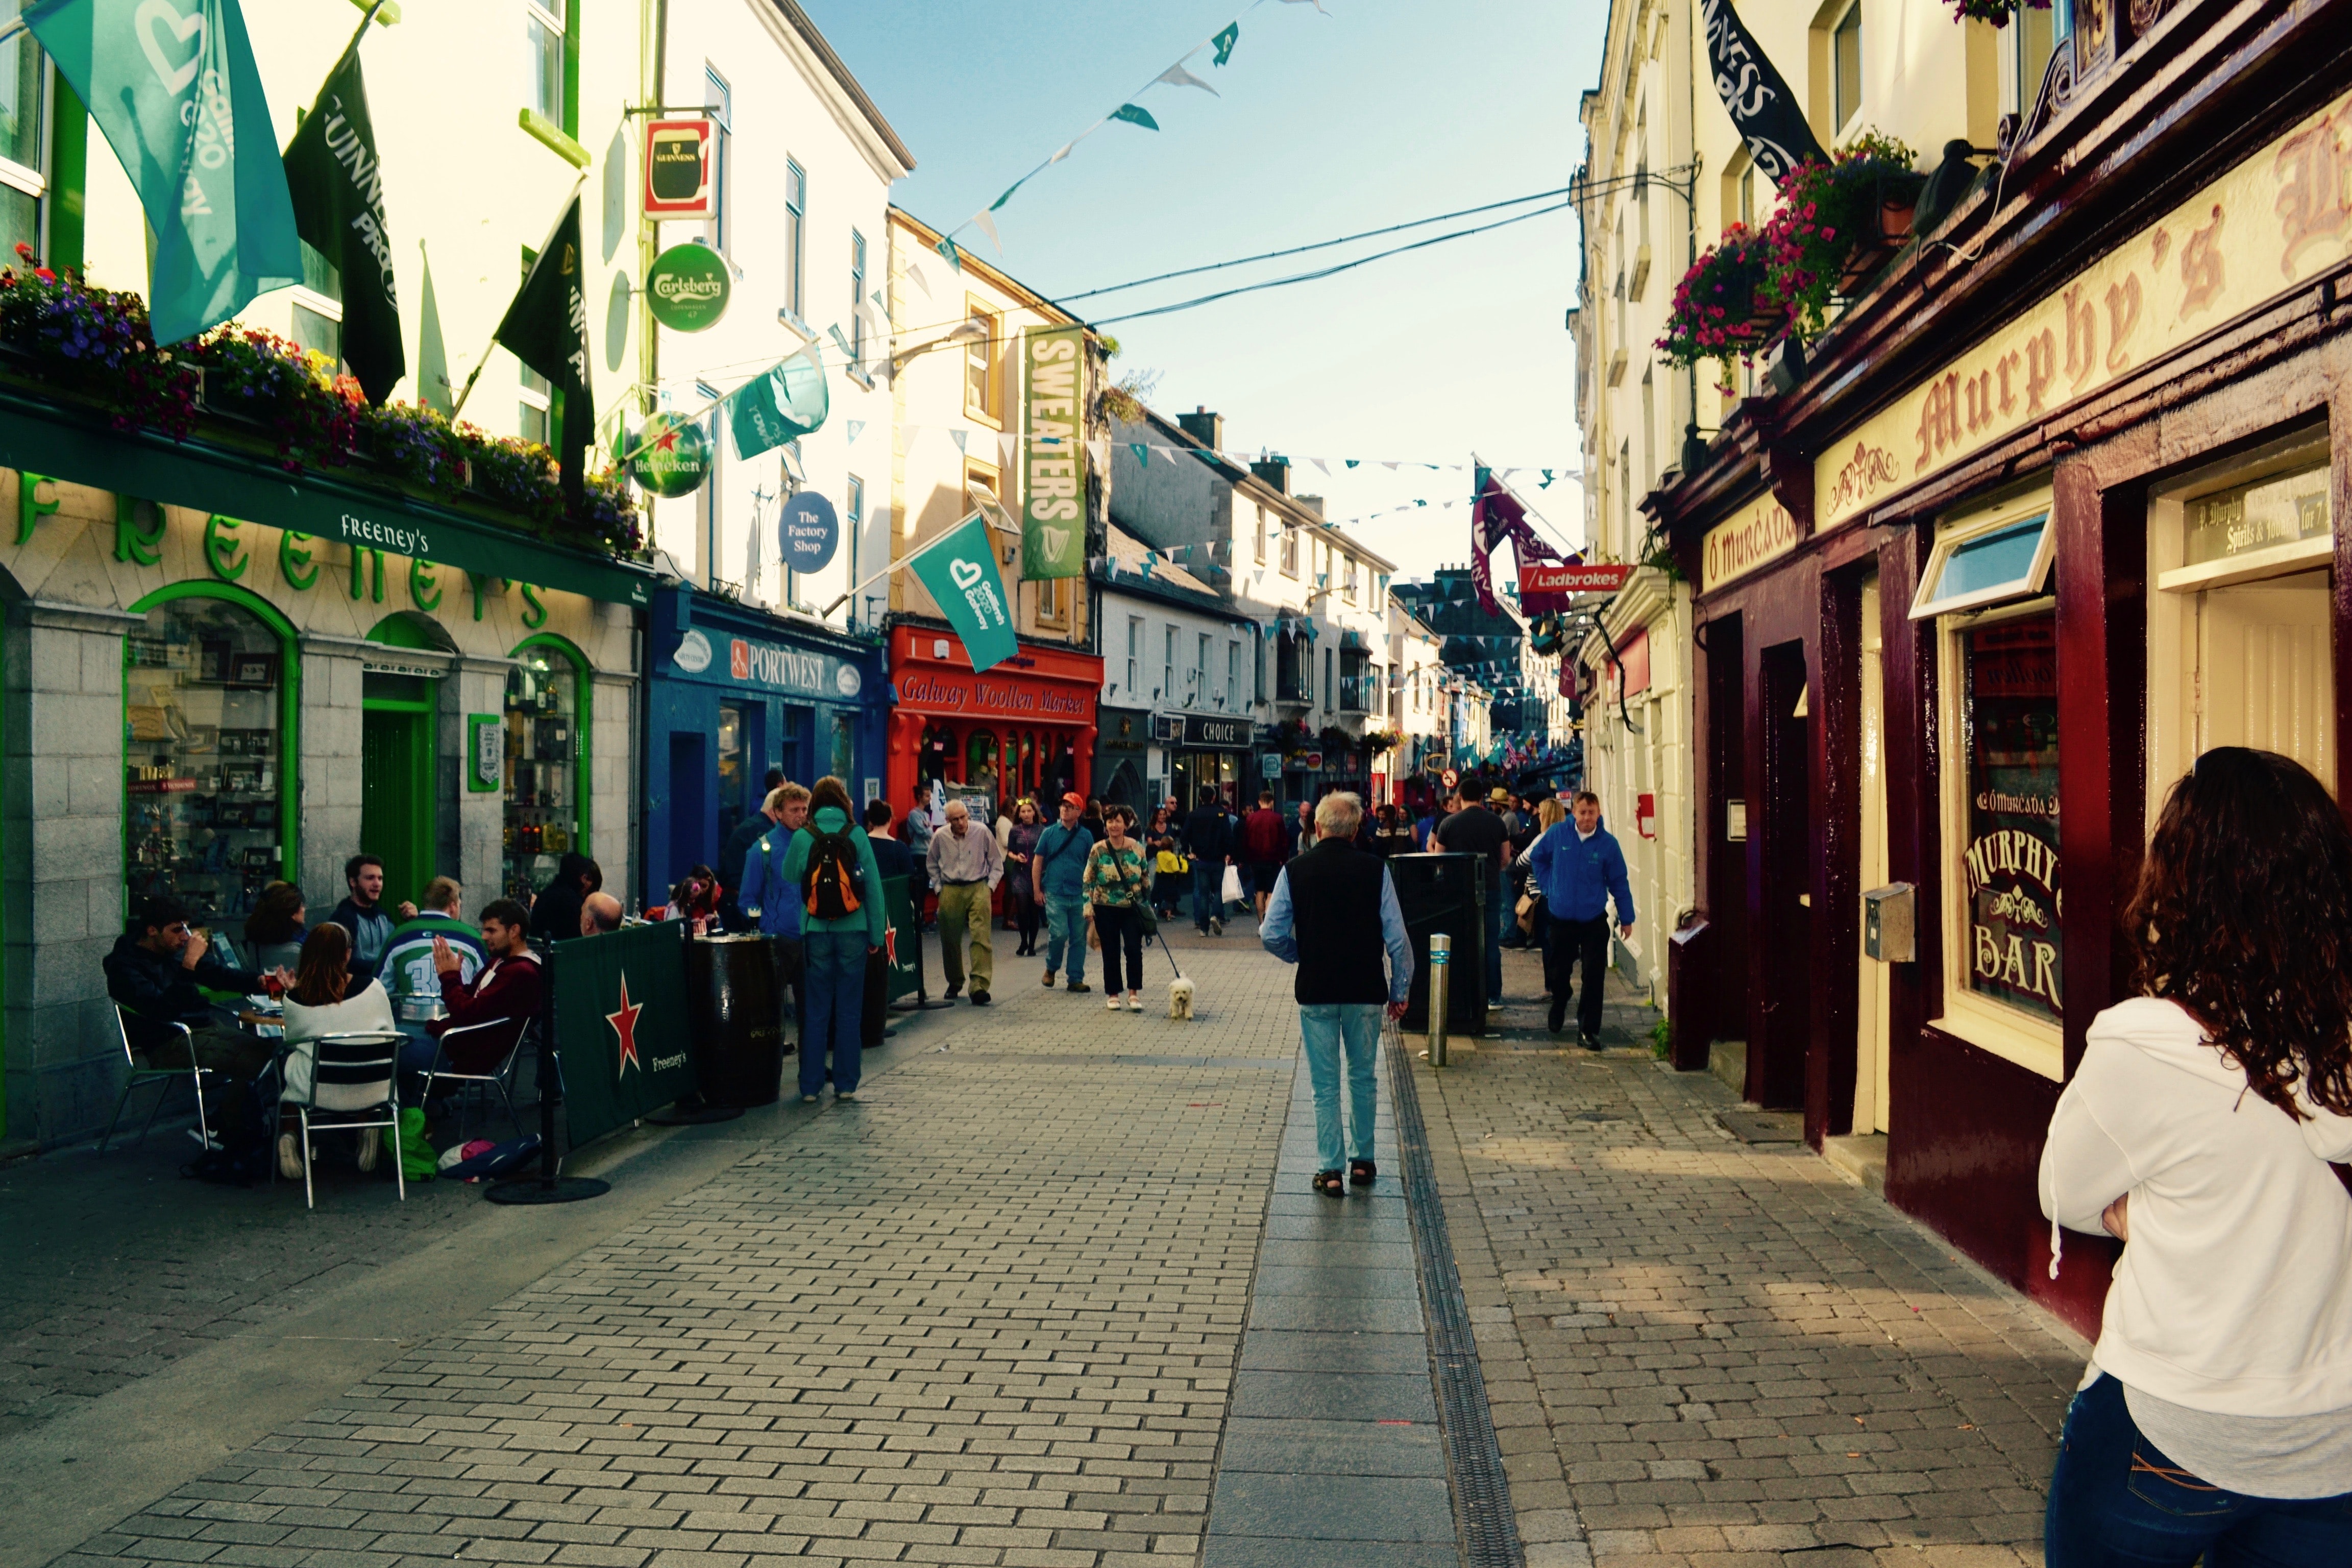 Intercâmbio em Galway